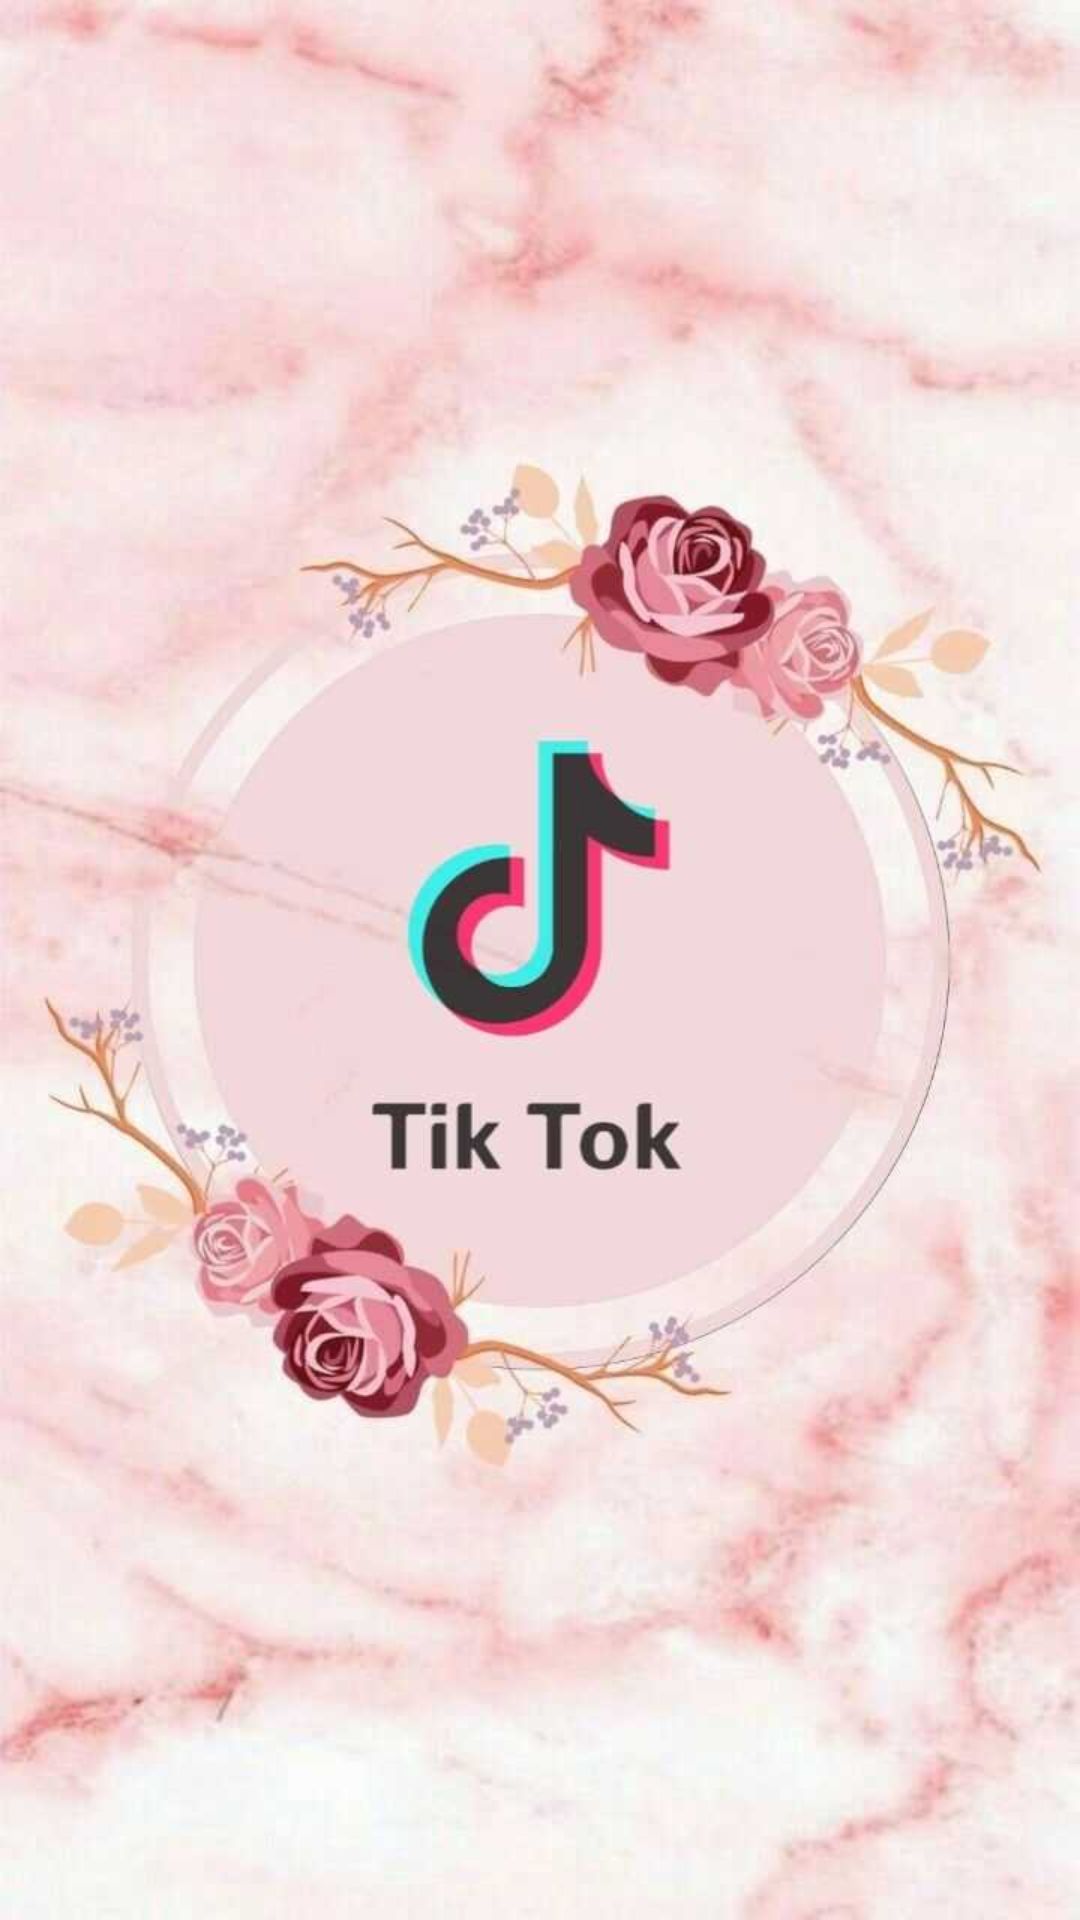 Tik Tok Images